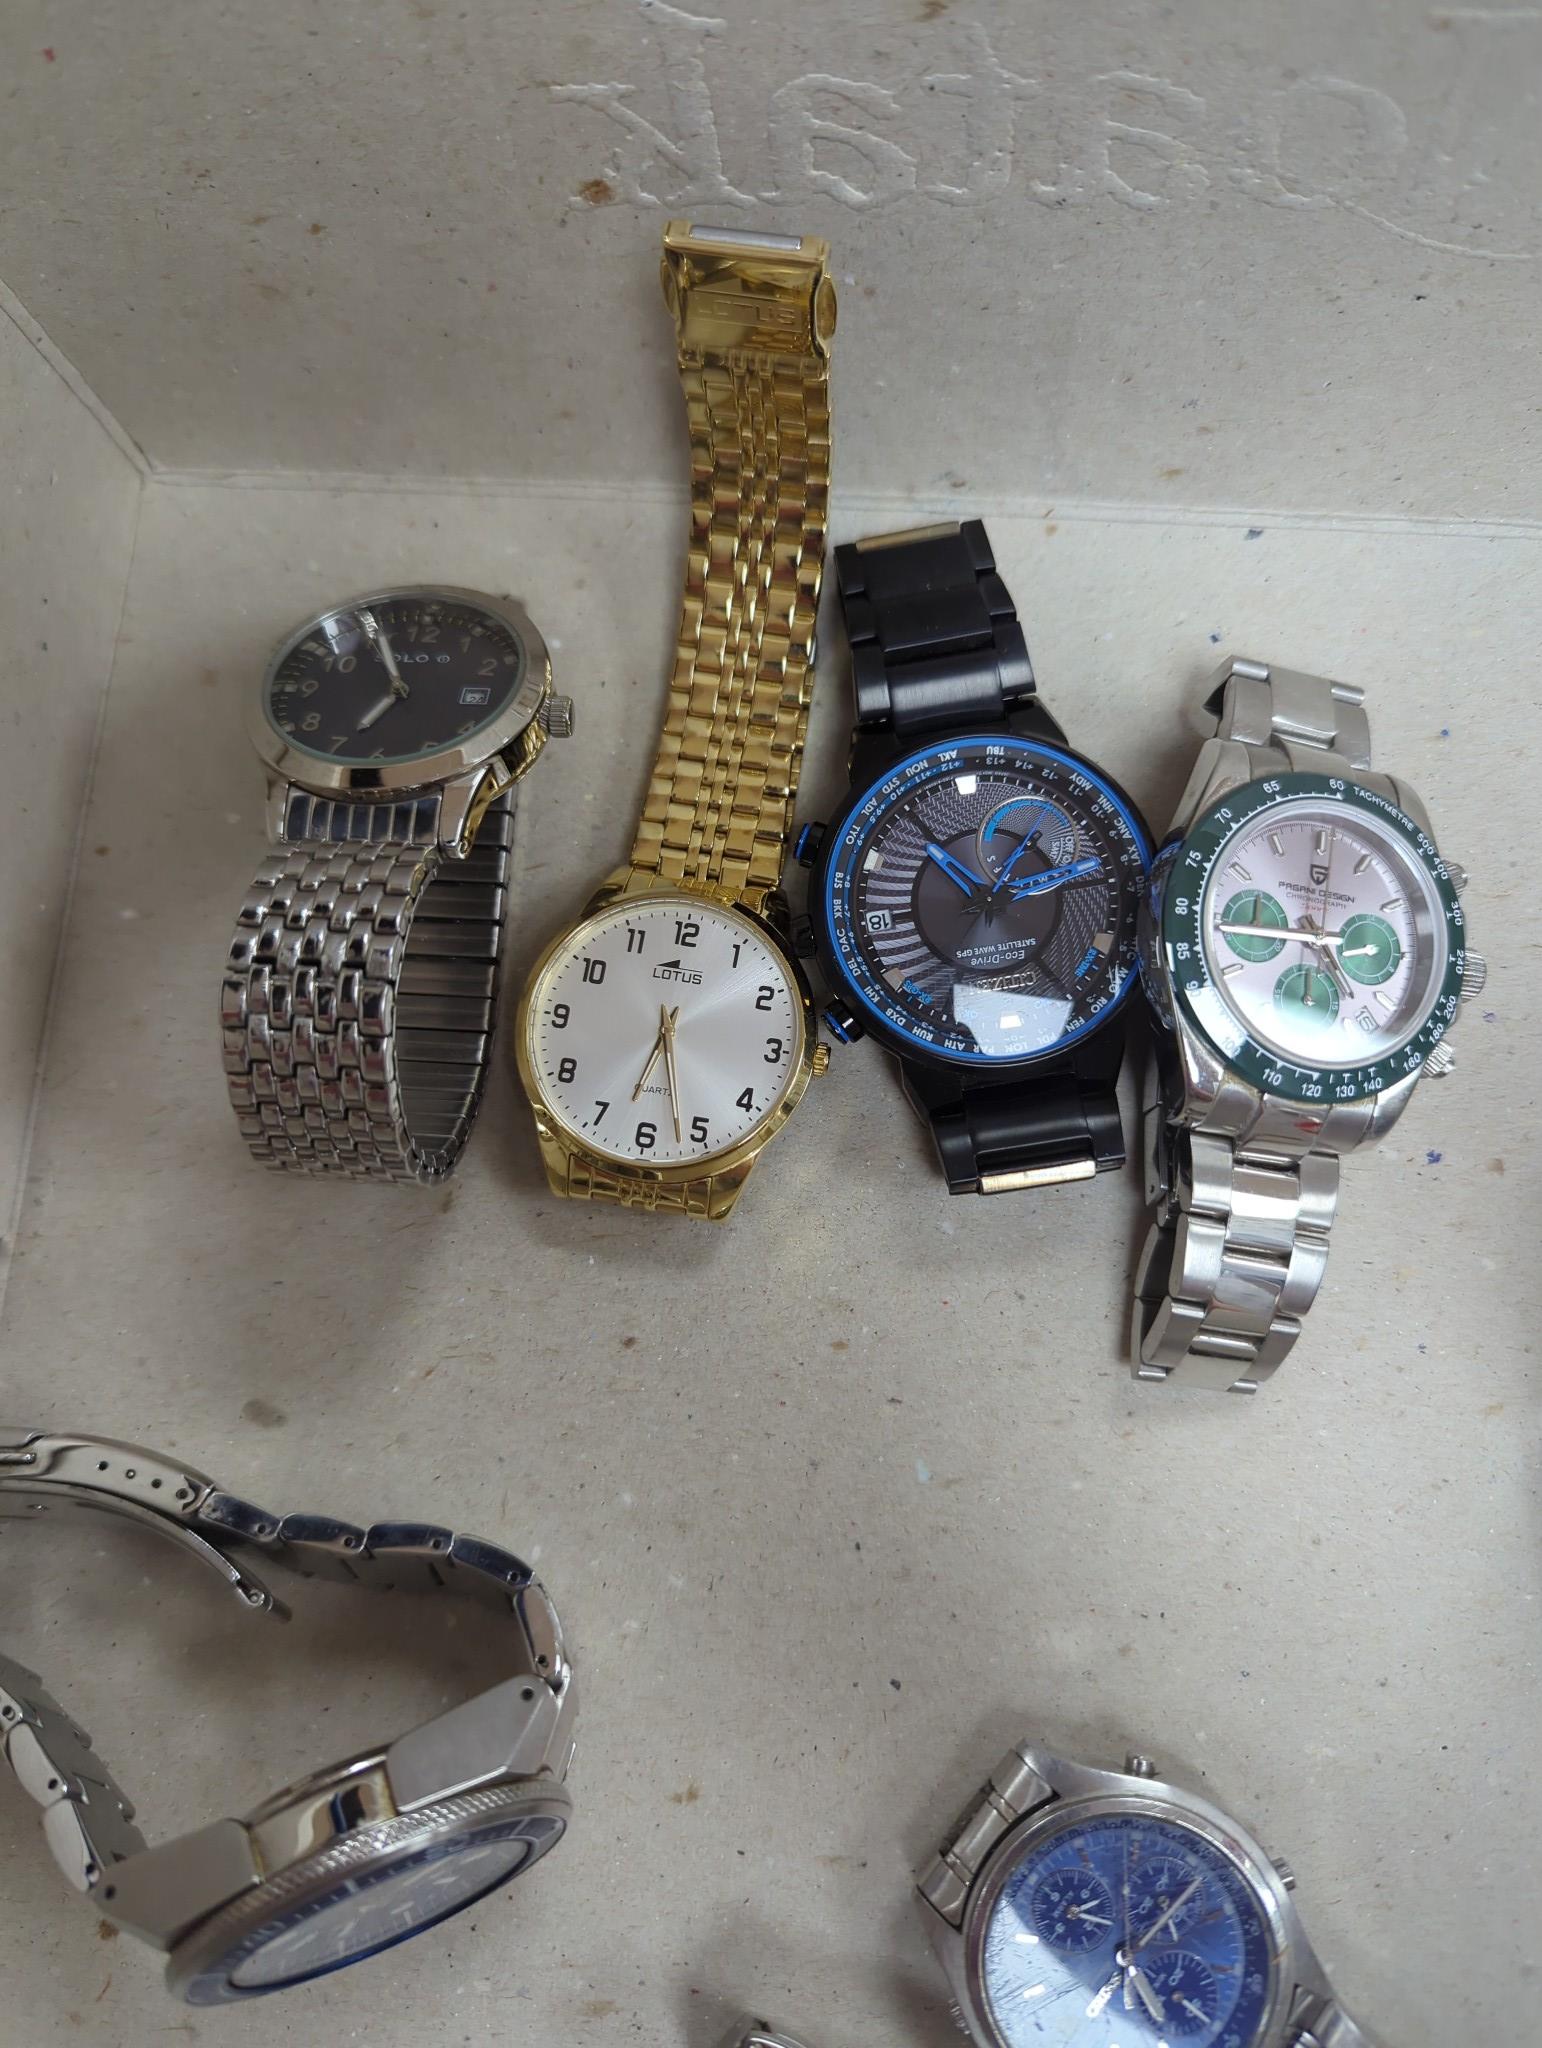 Twenty assorted gentleman's modern wrist watches including Design Lige Watch 1856, Seiko Automatic Divers, Seiko 5 Sport, Seiko Connoisseur quartz, Citizen Ecodrive, Casio Beside, Pagani Design, Maurice Lacroix, Morellat